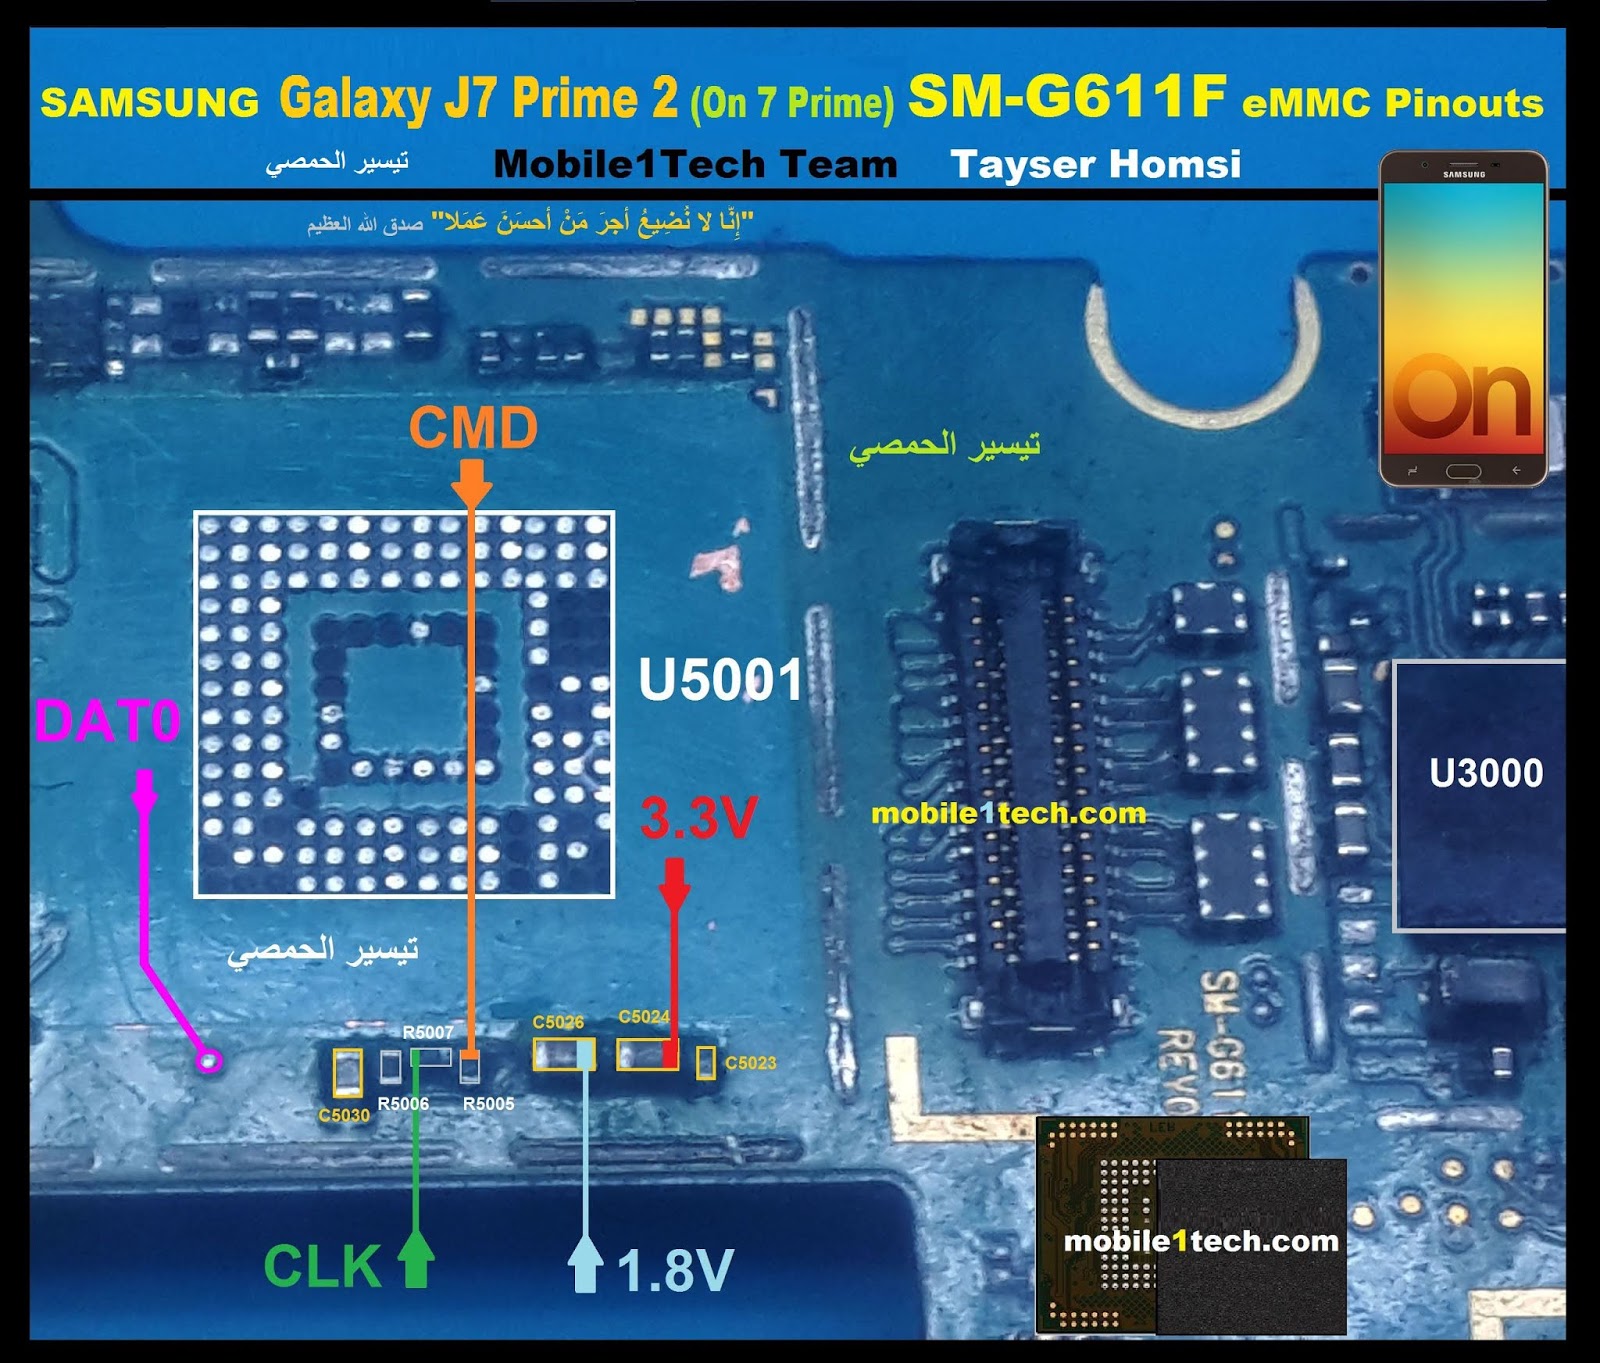 Samsung Galaxy J7 Prime 2 G611f Emmc Pinout